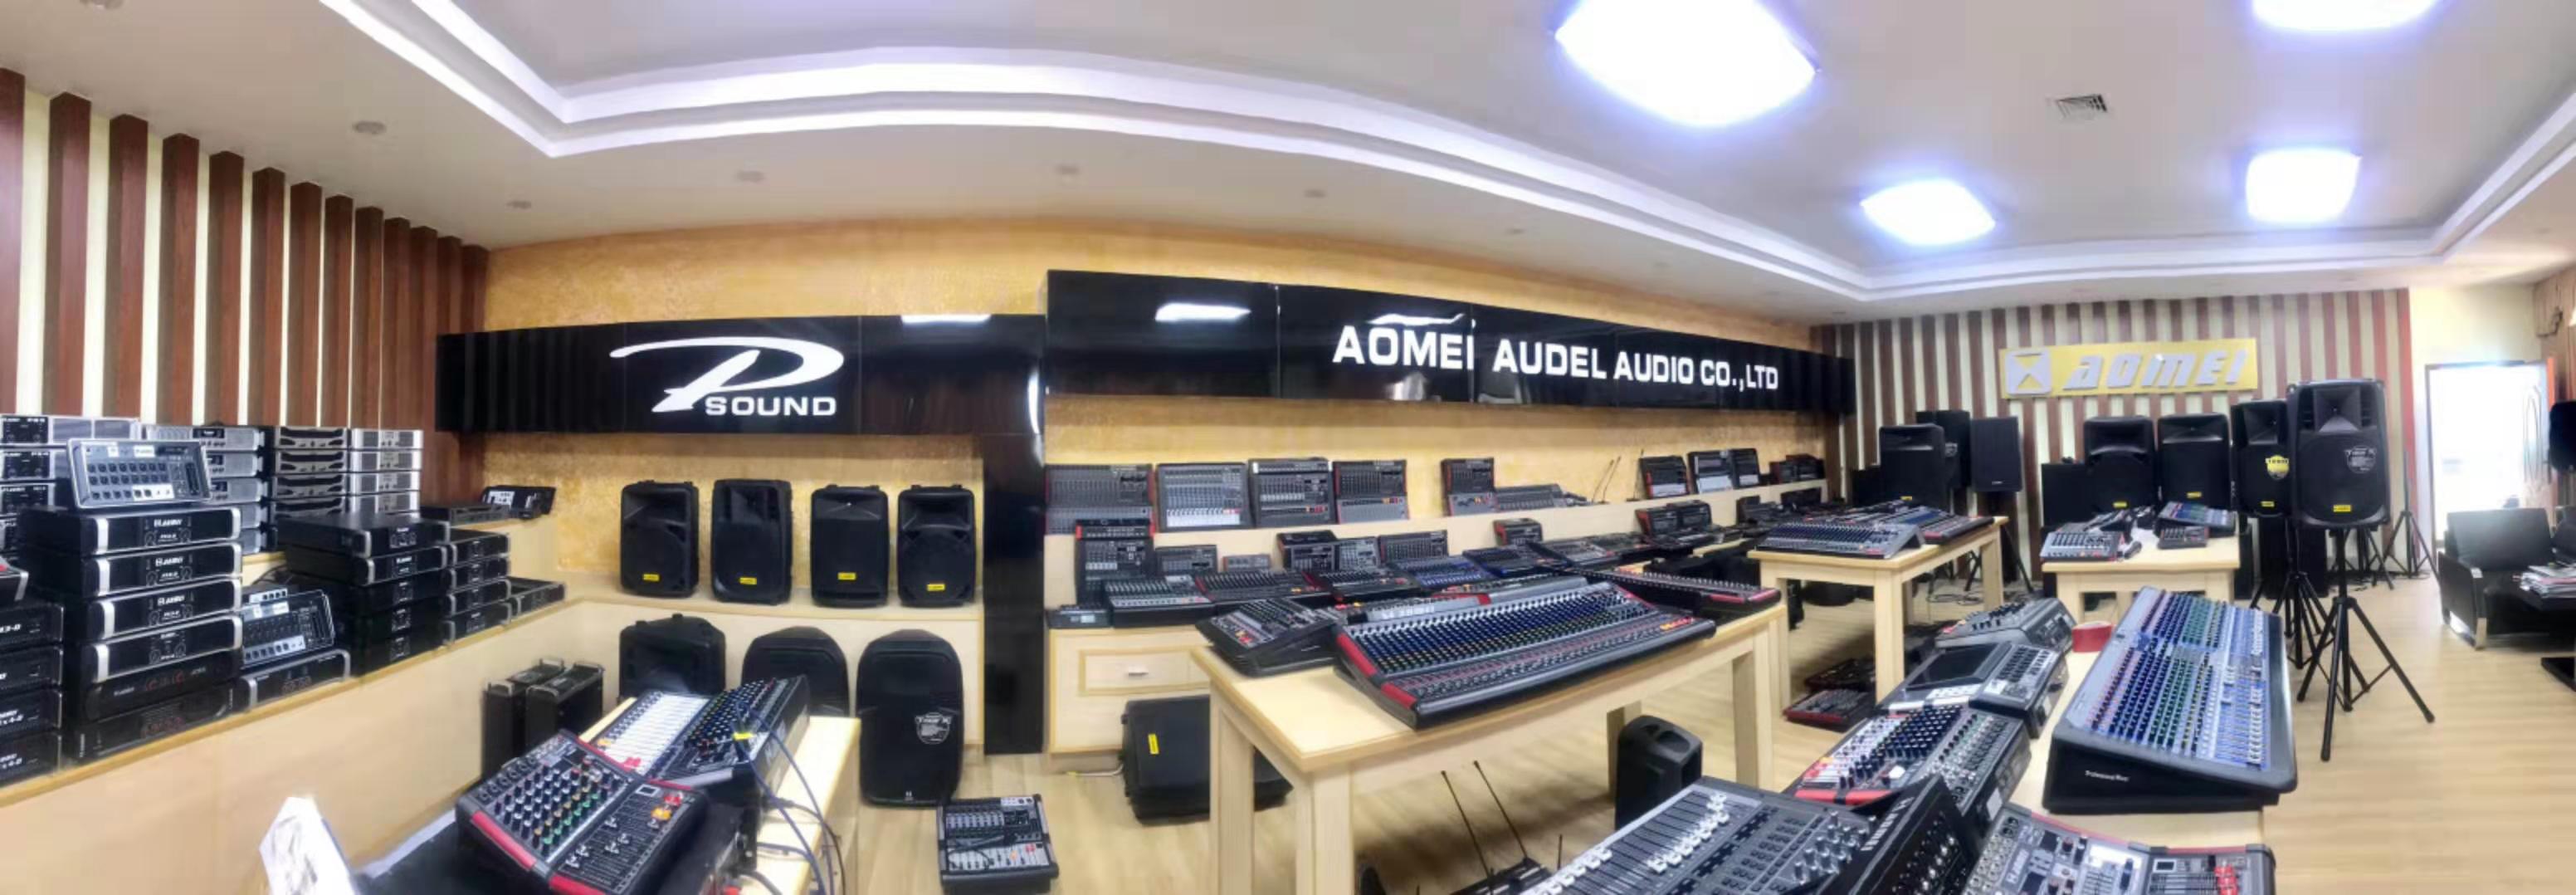 aomei audio showroom